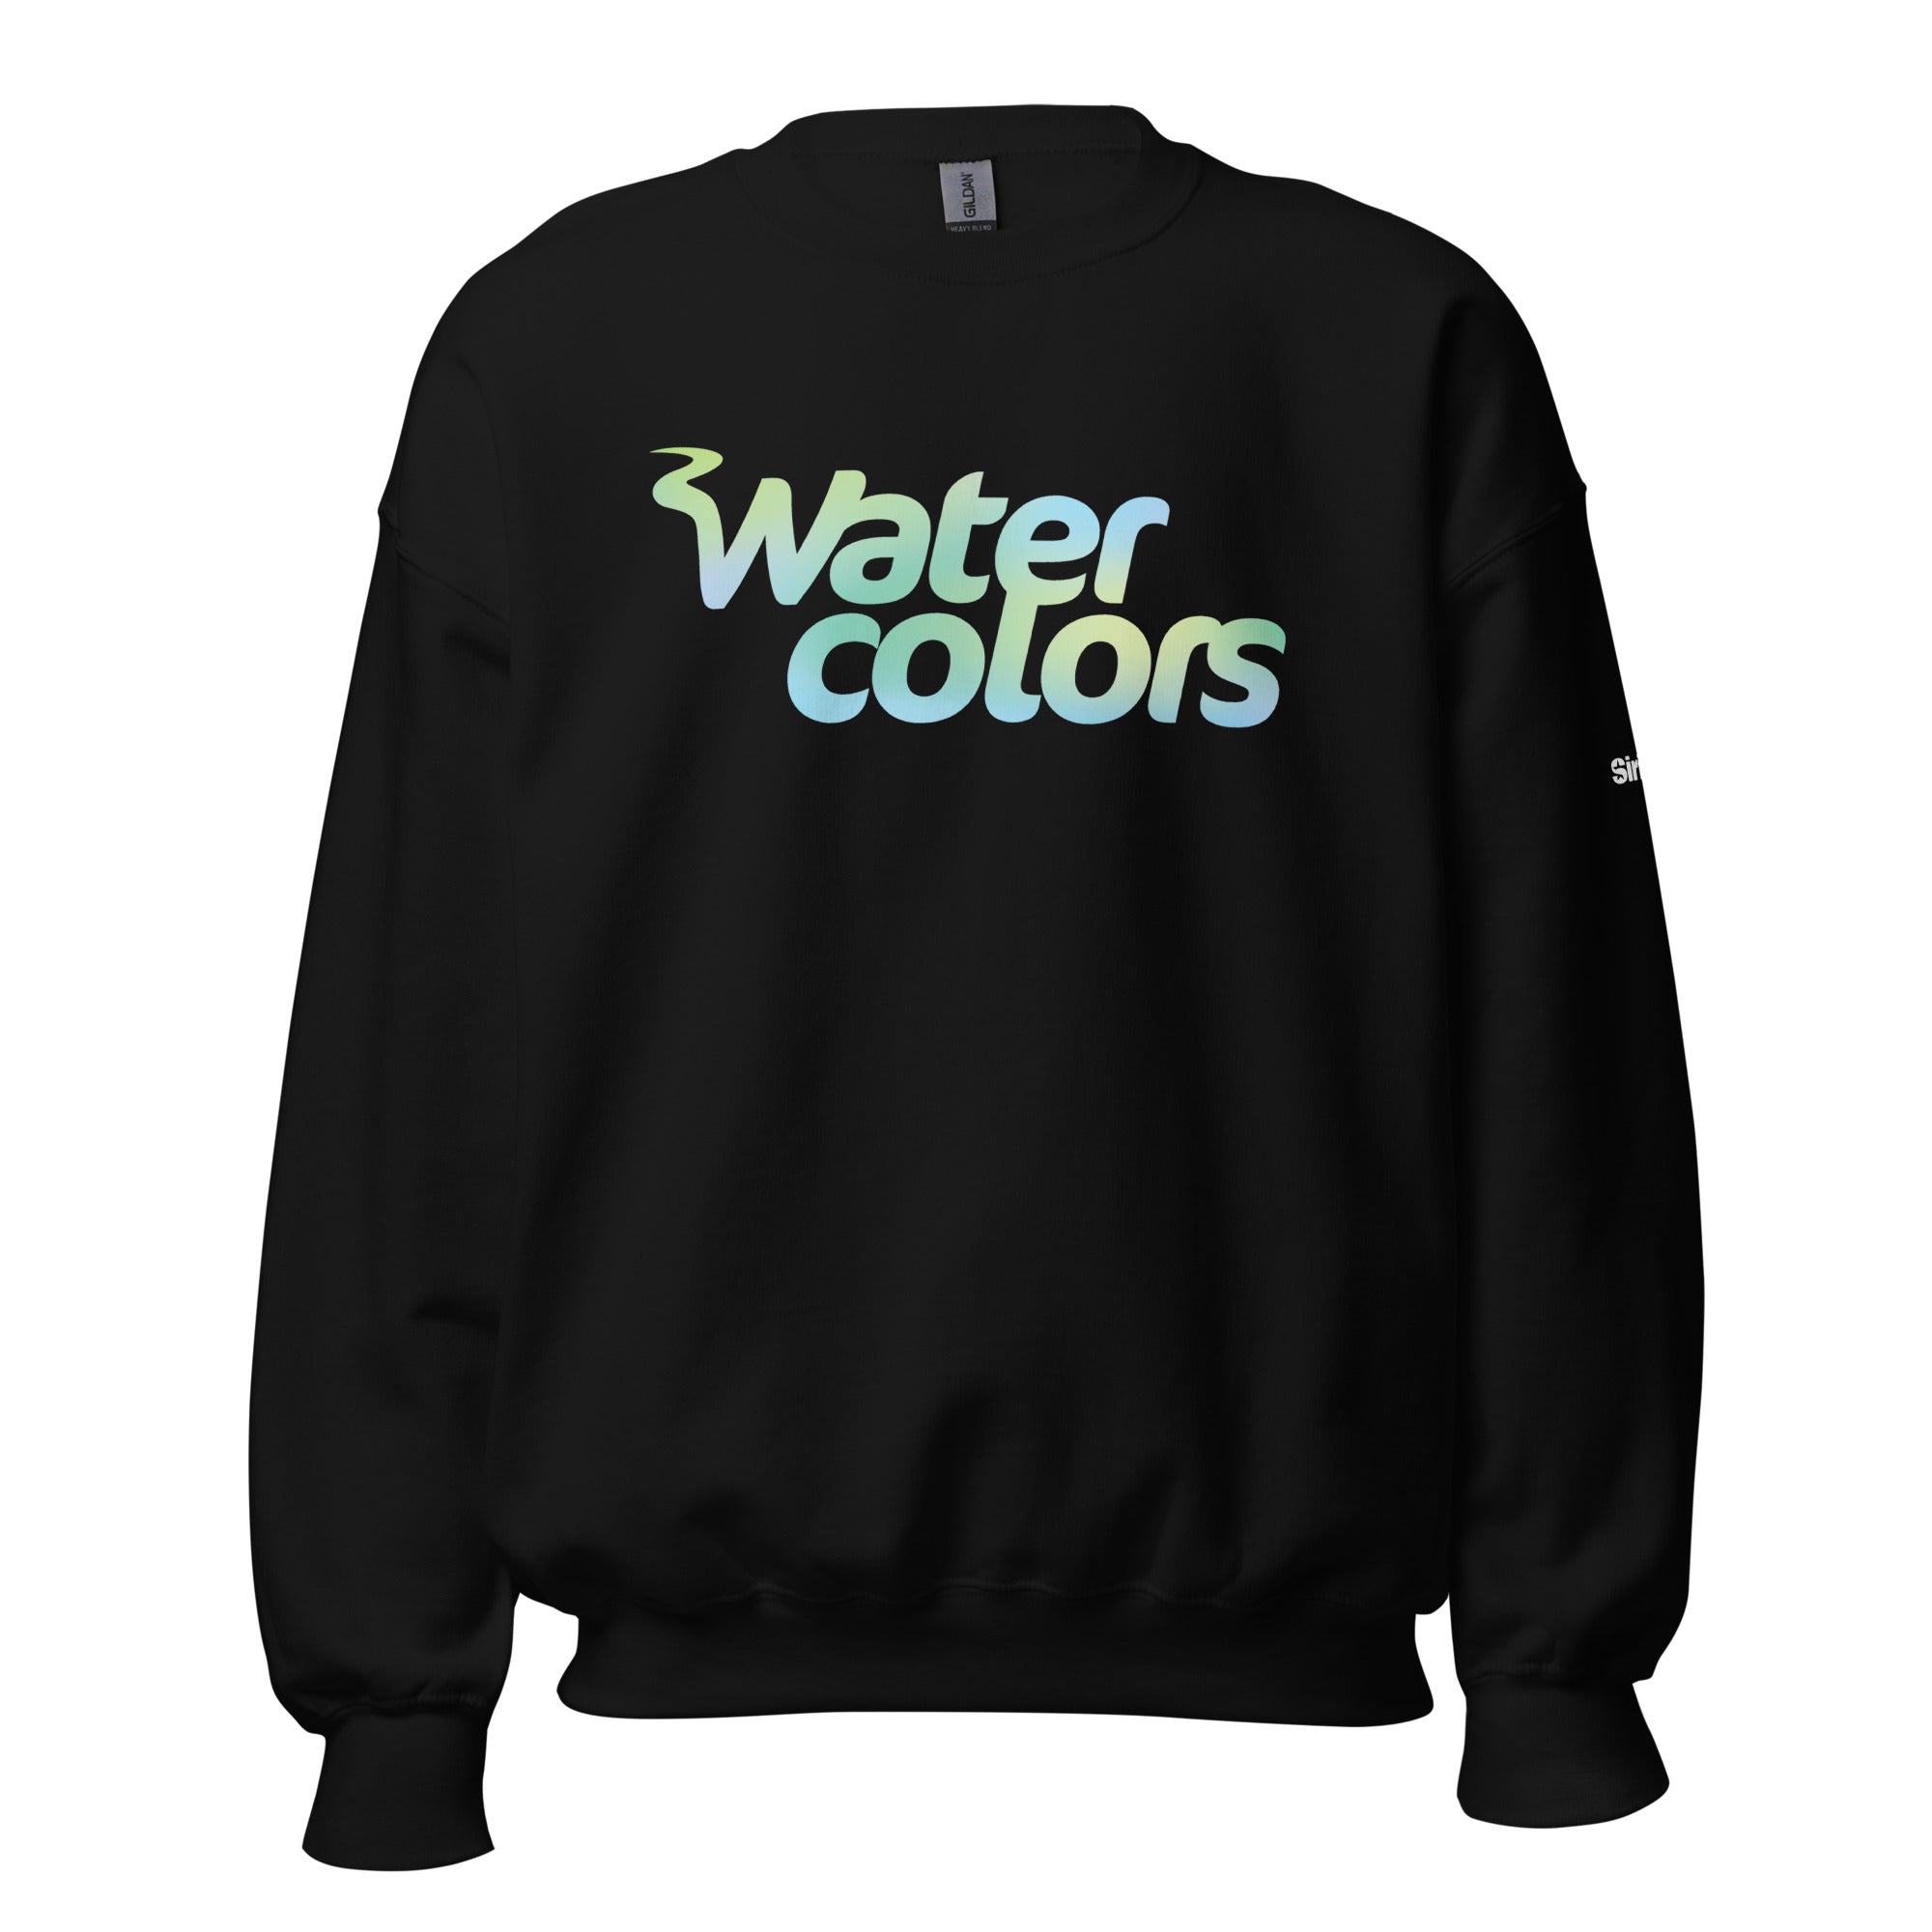 Watercolors: Sweatshirt (Black)